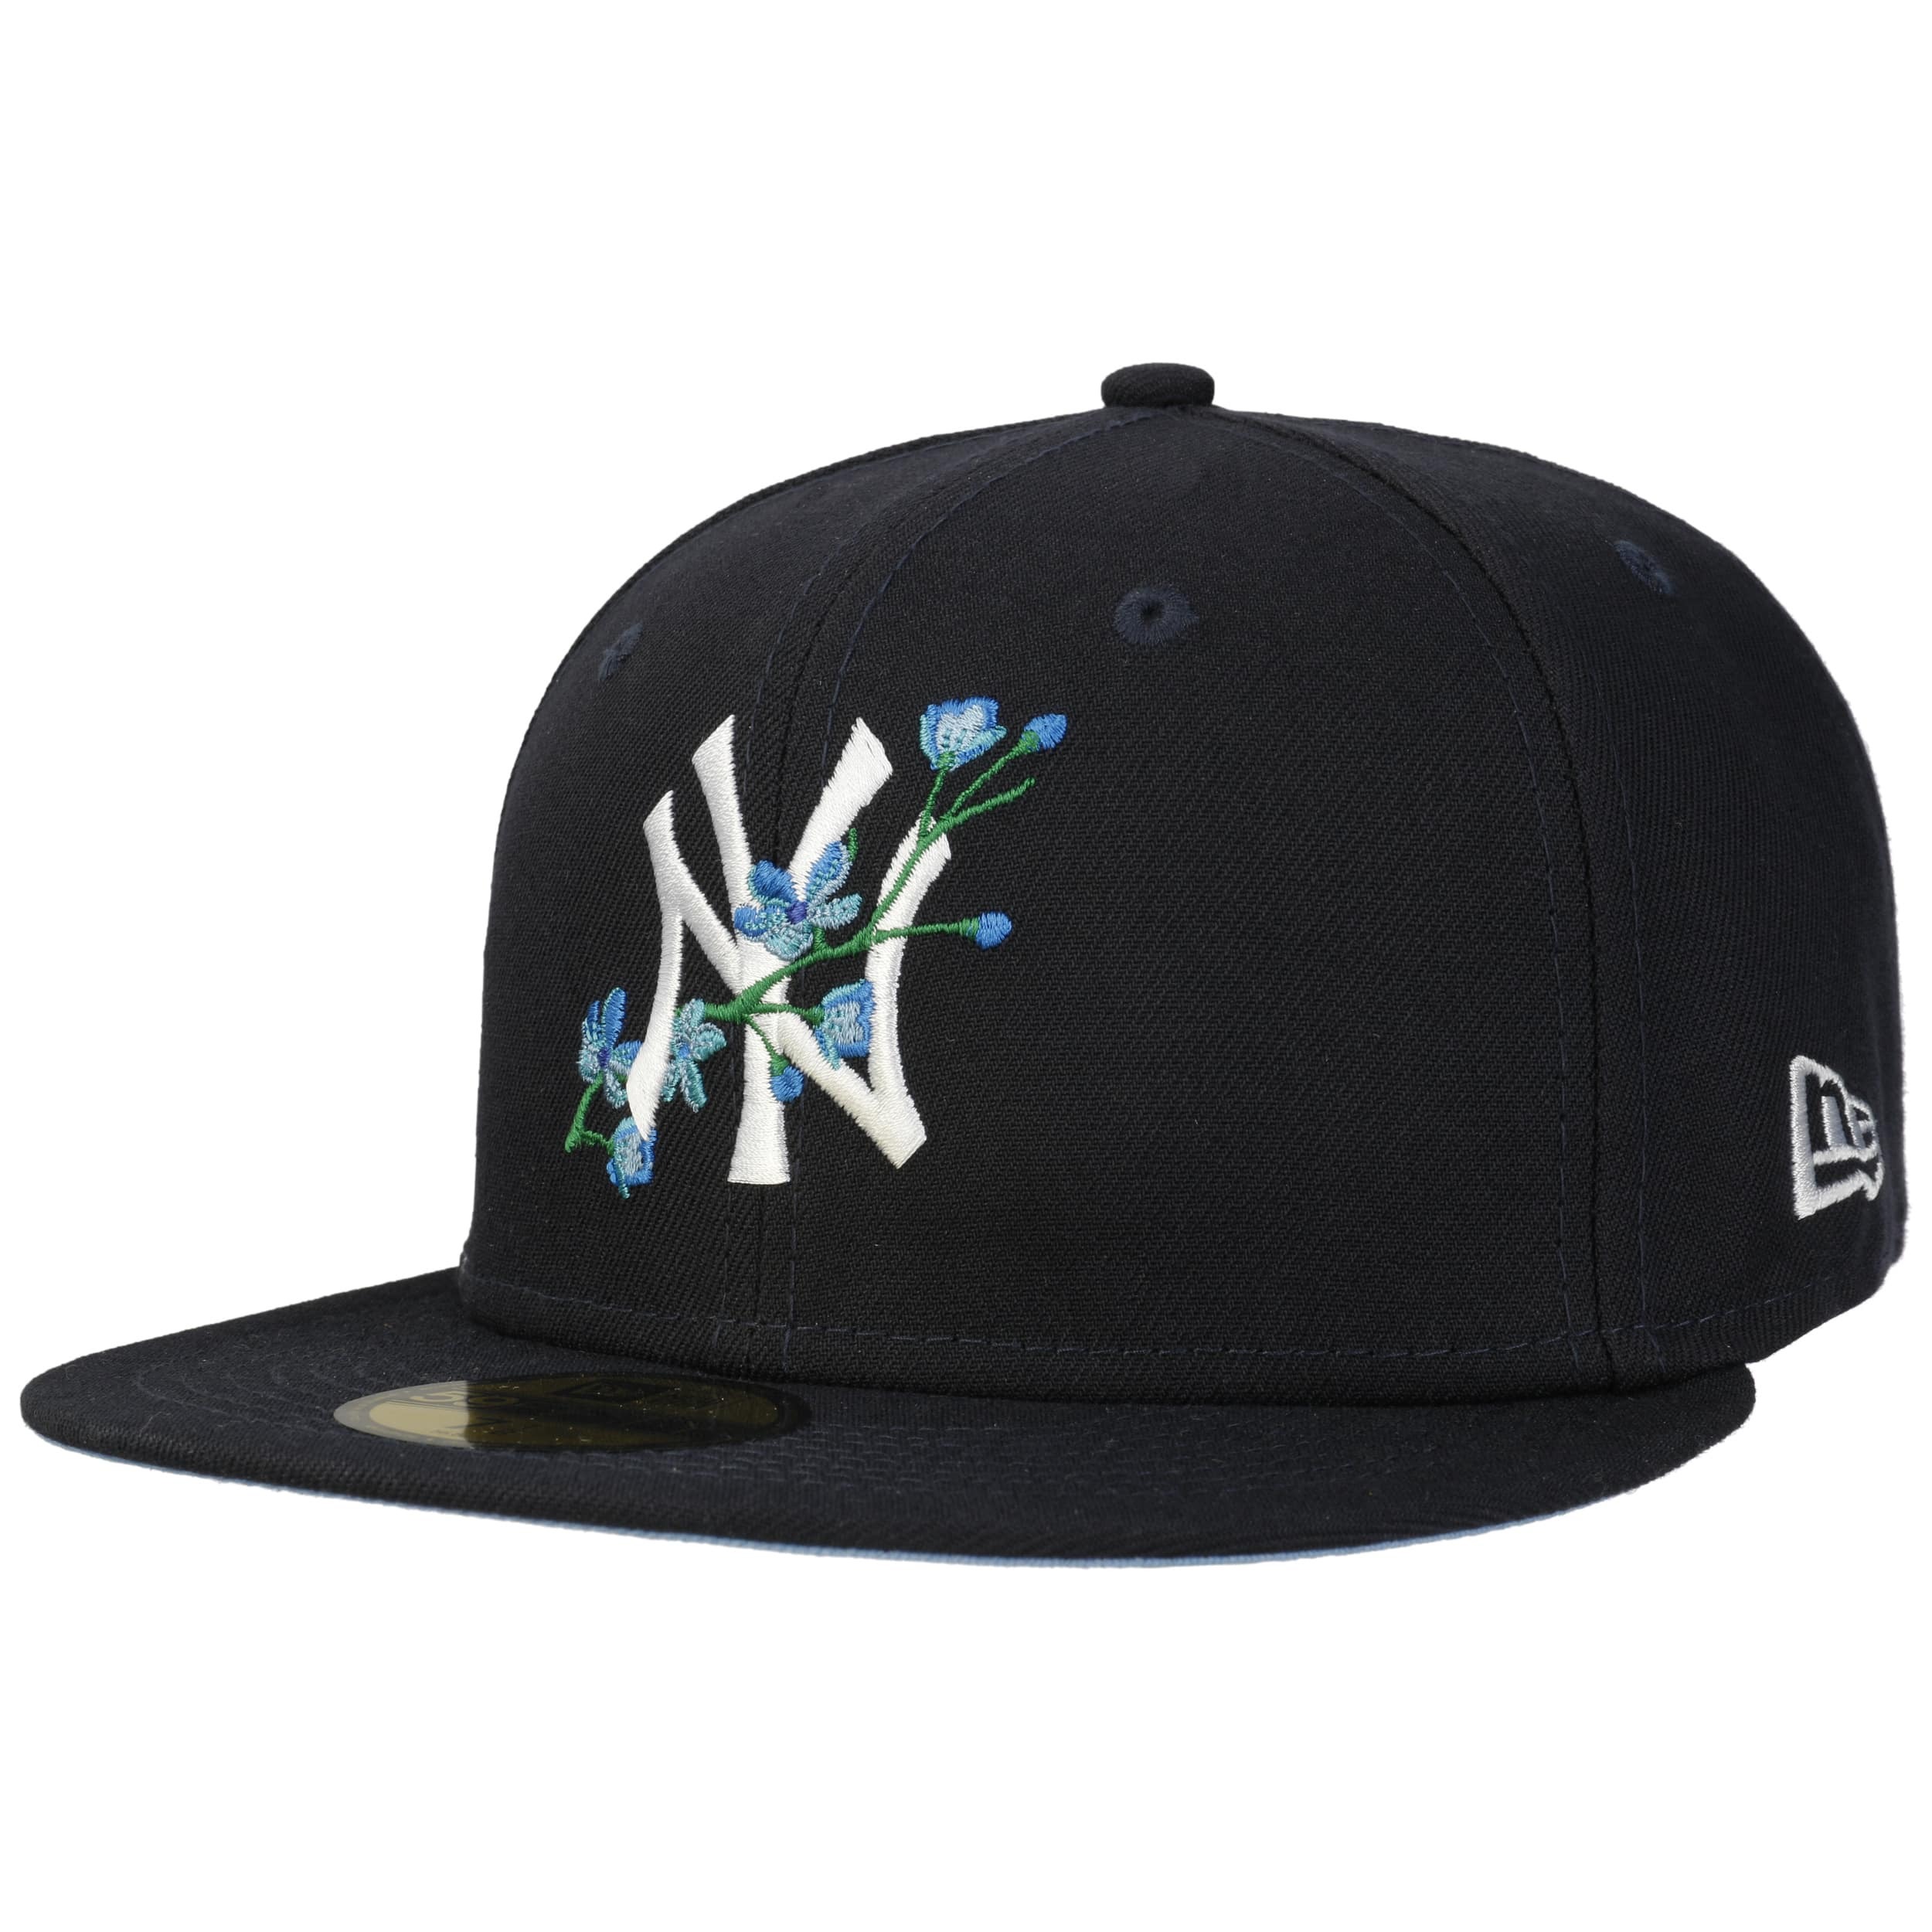 Acheter la casquette 59Fifty des New York Yankees - New era